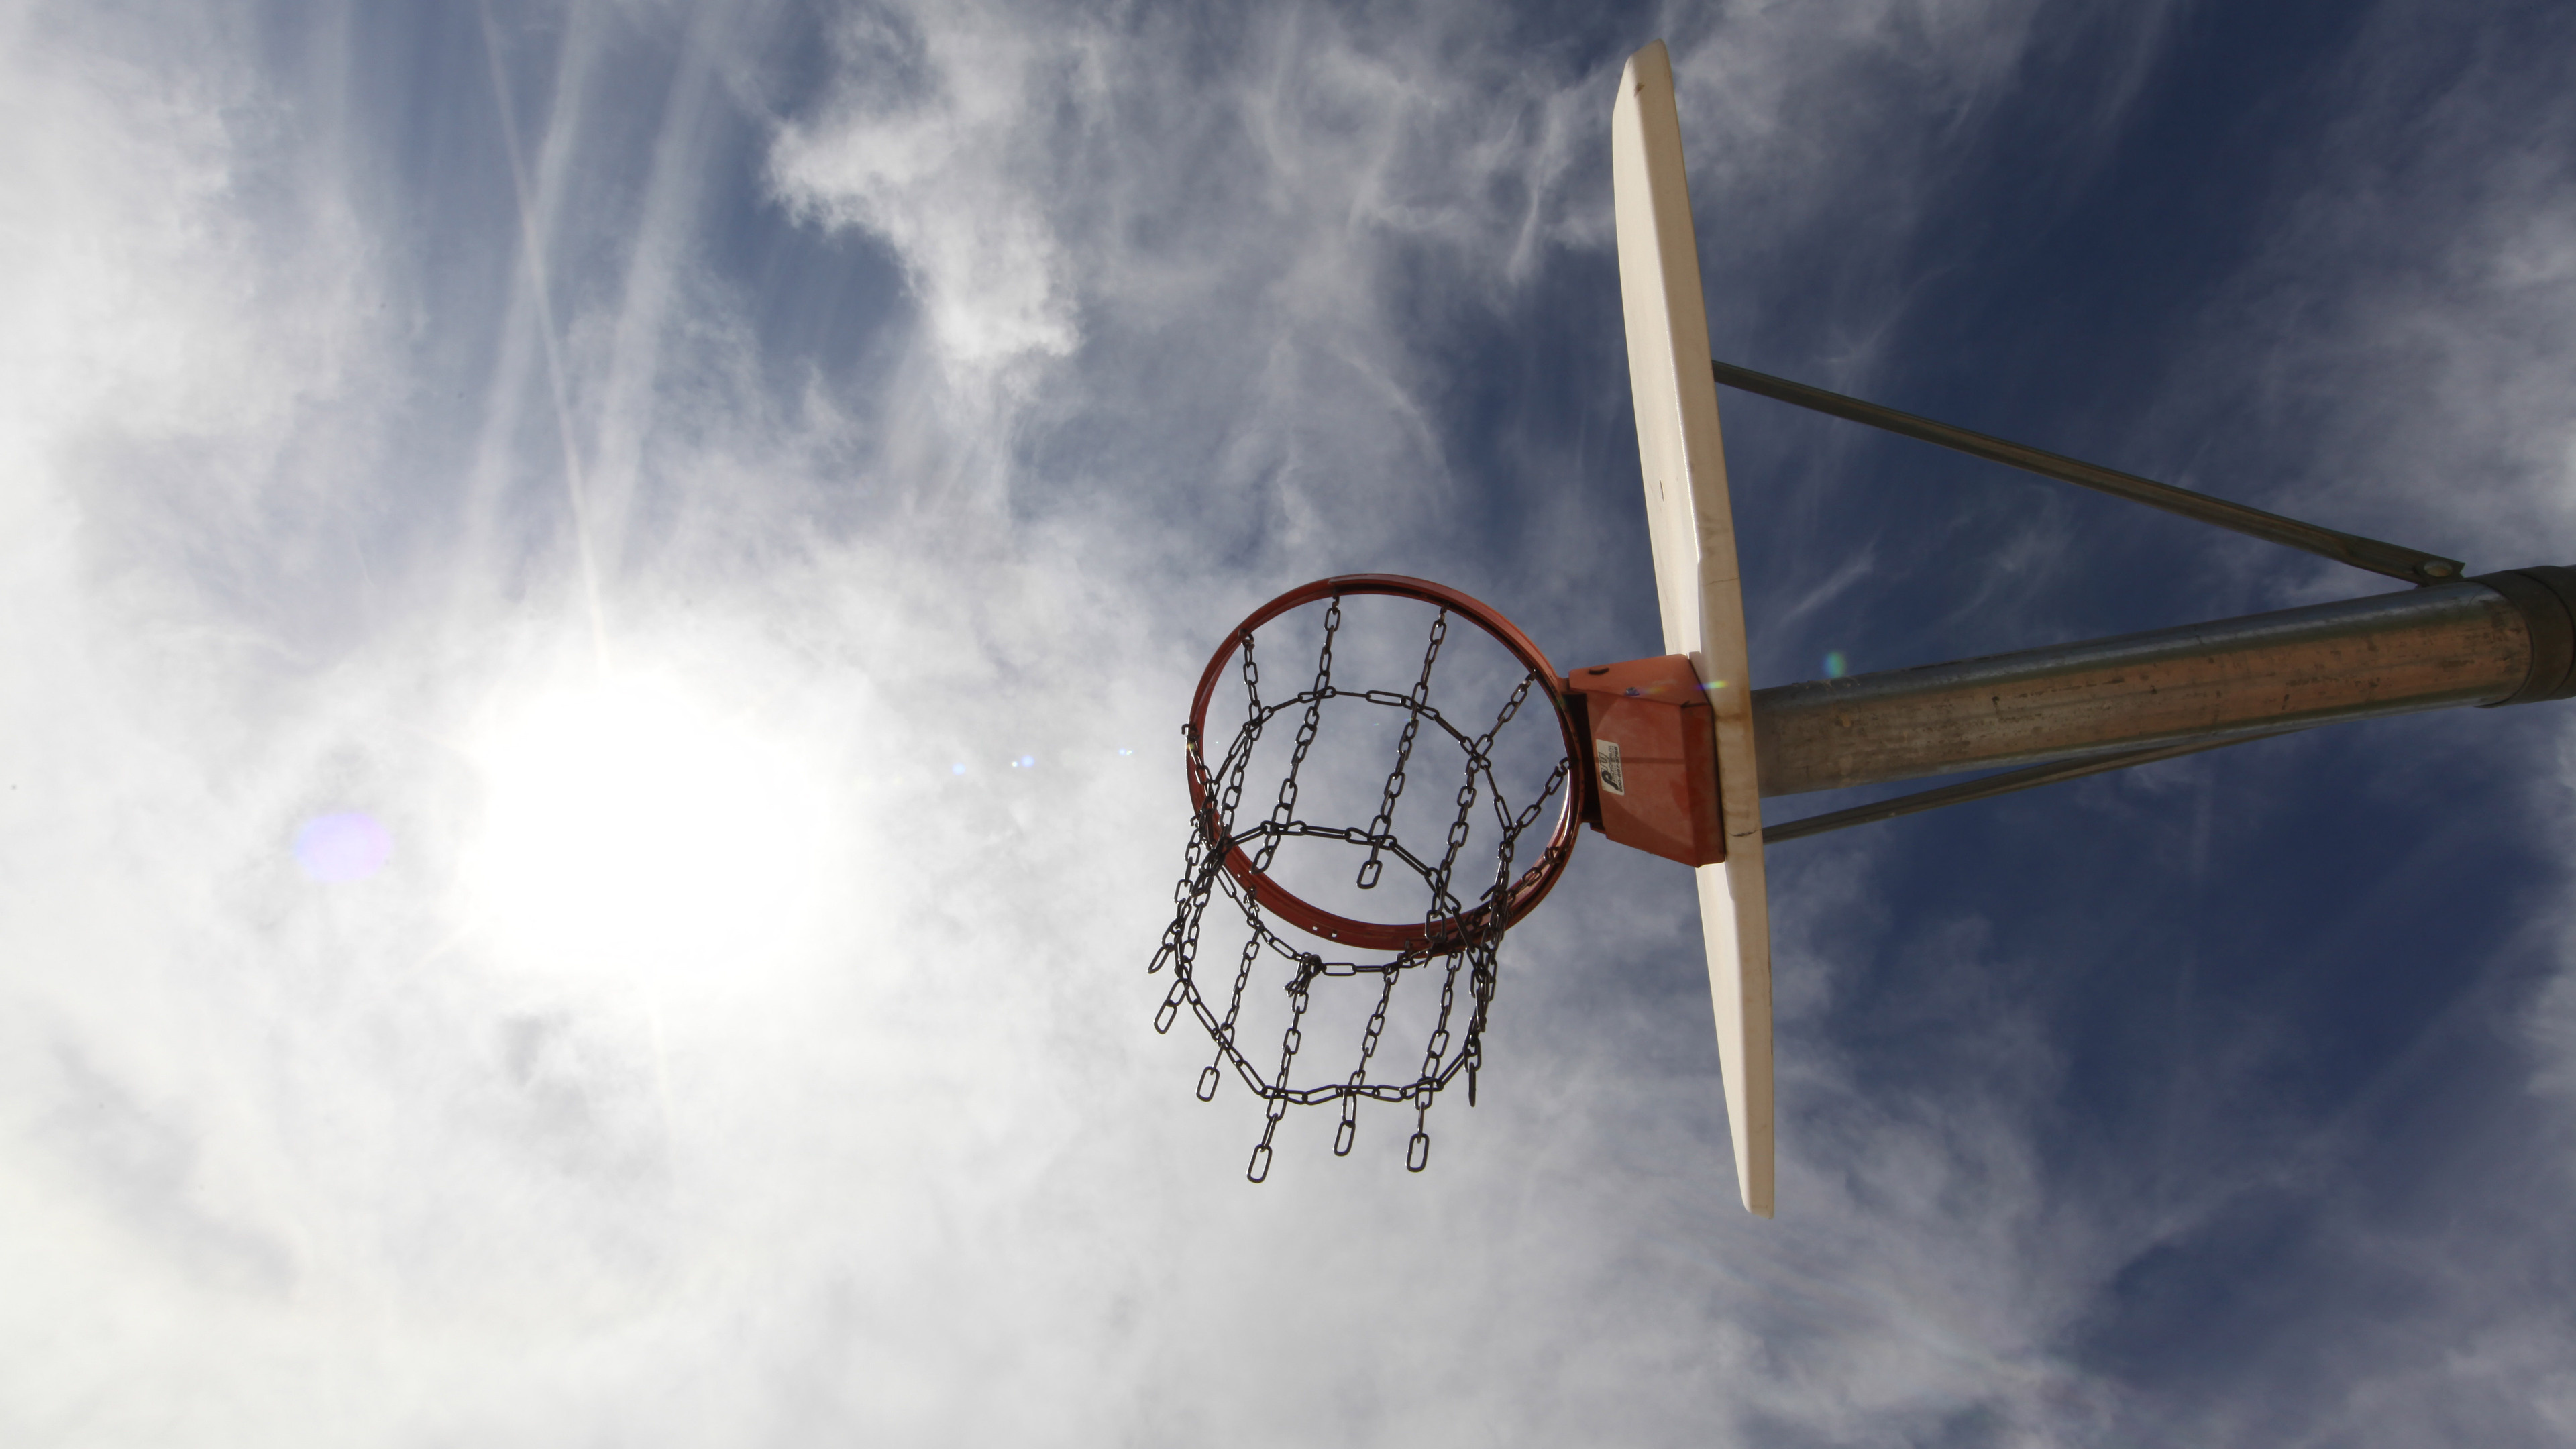 Streetball: Basketball Basket, Urban sports played on asphalt. 3840x2160 4K Background.